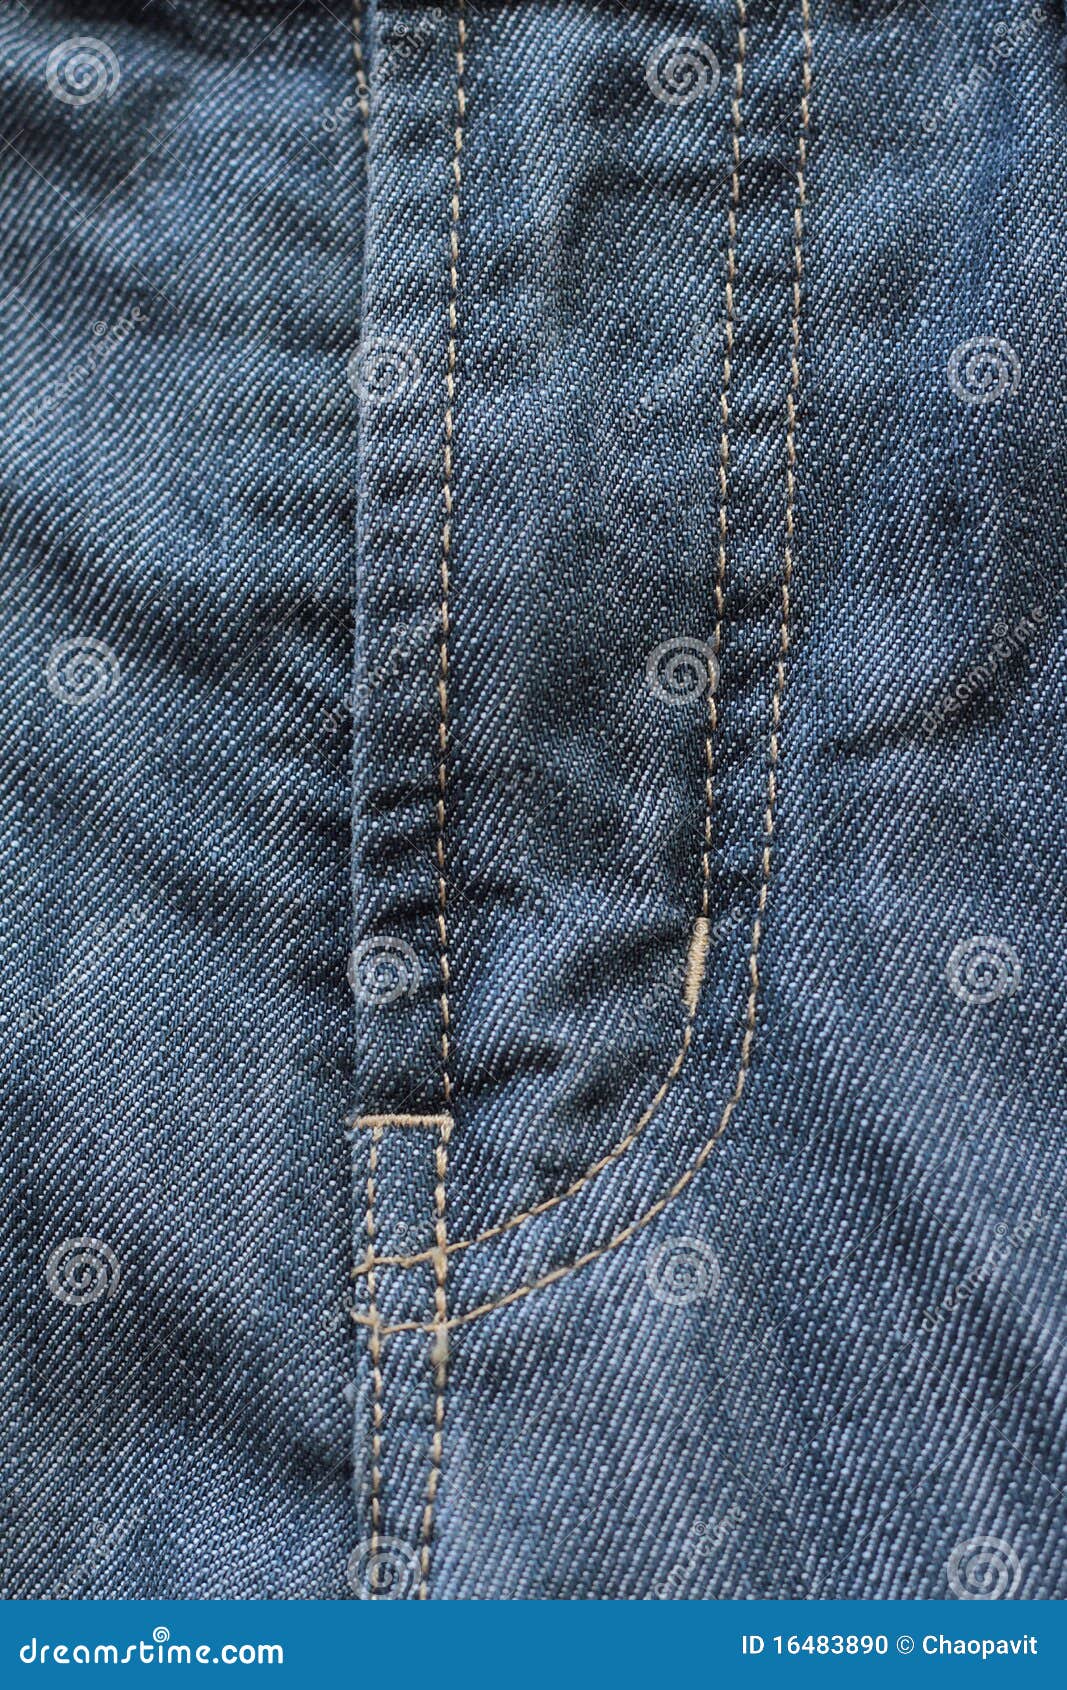 Jean stock photo. Image of macro, fabric, rivet, textile - 16483890